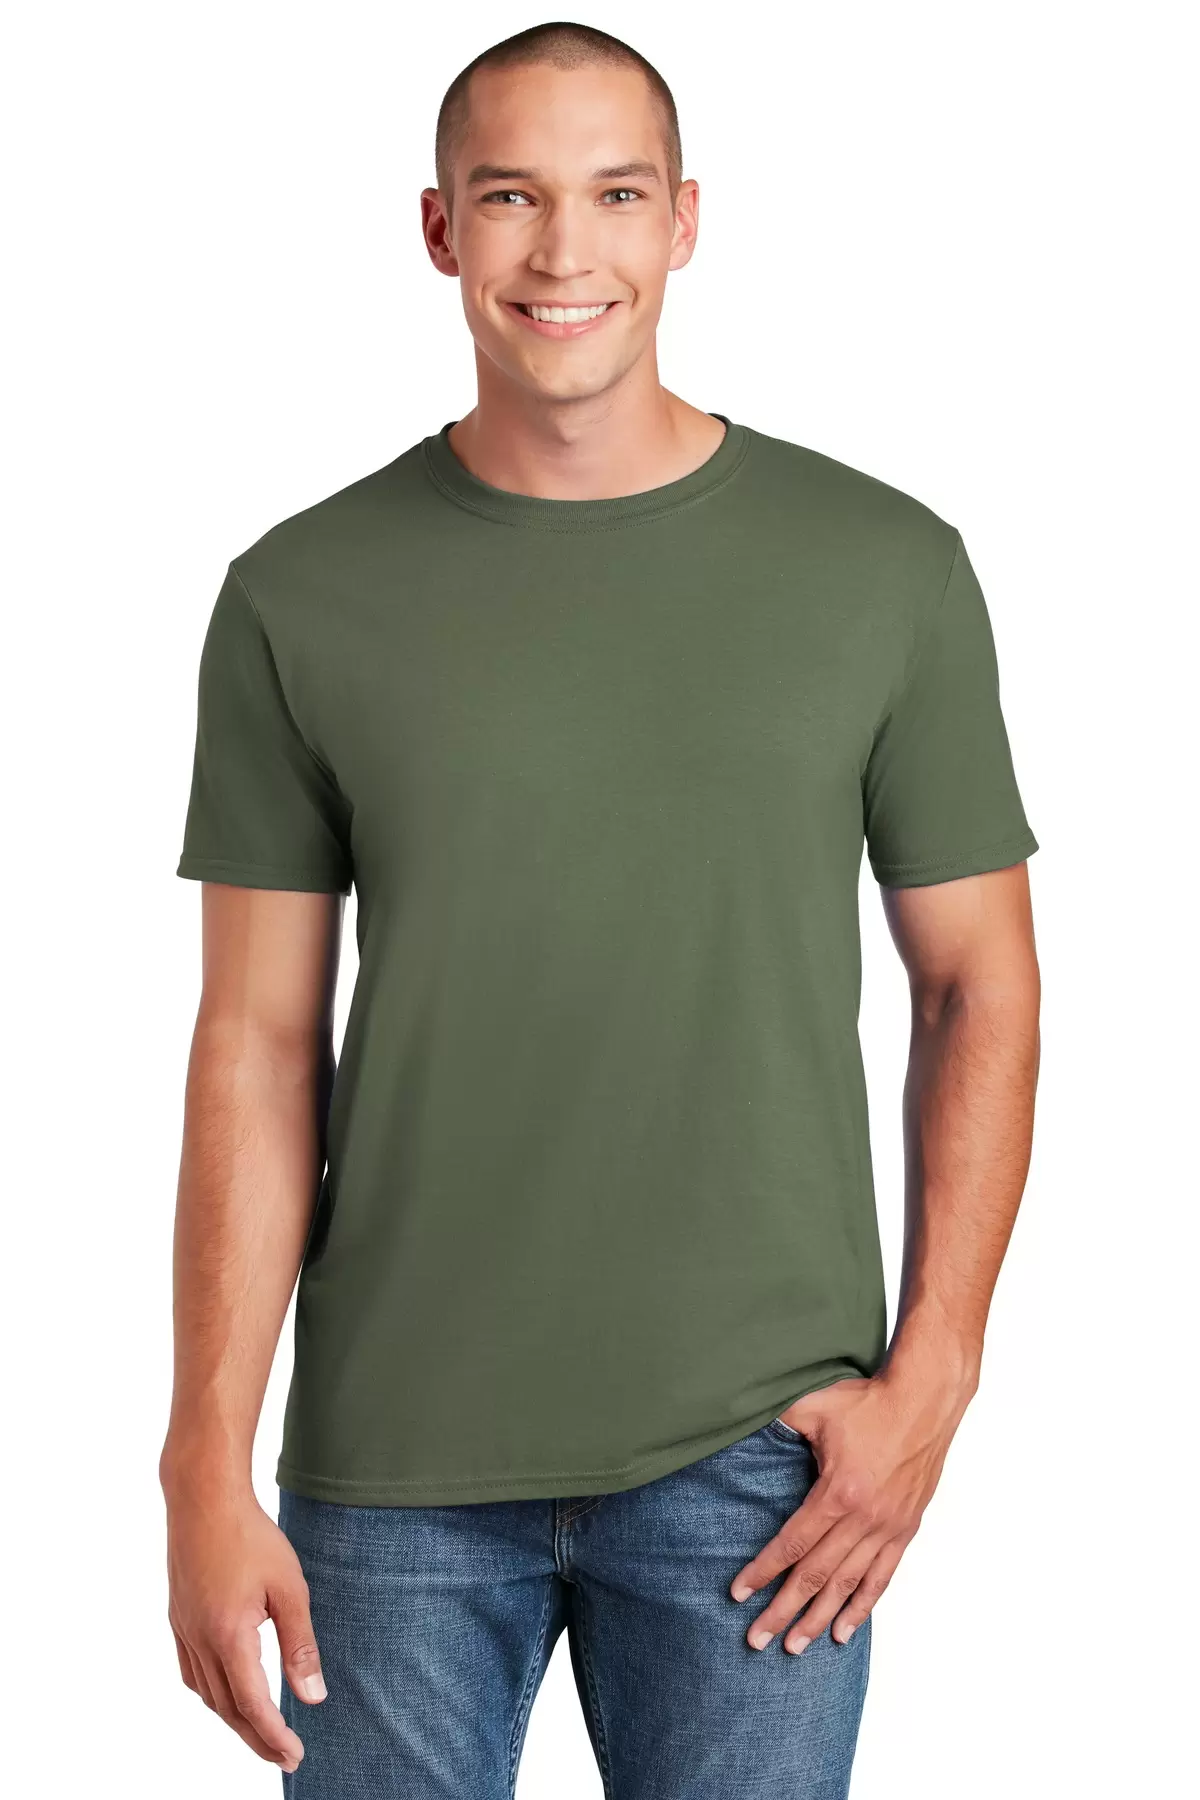 Gildan 64000 |Gildan G640 Softstyle T-shirt Military Green - From $3.31